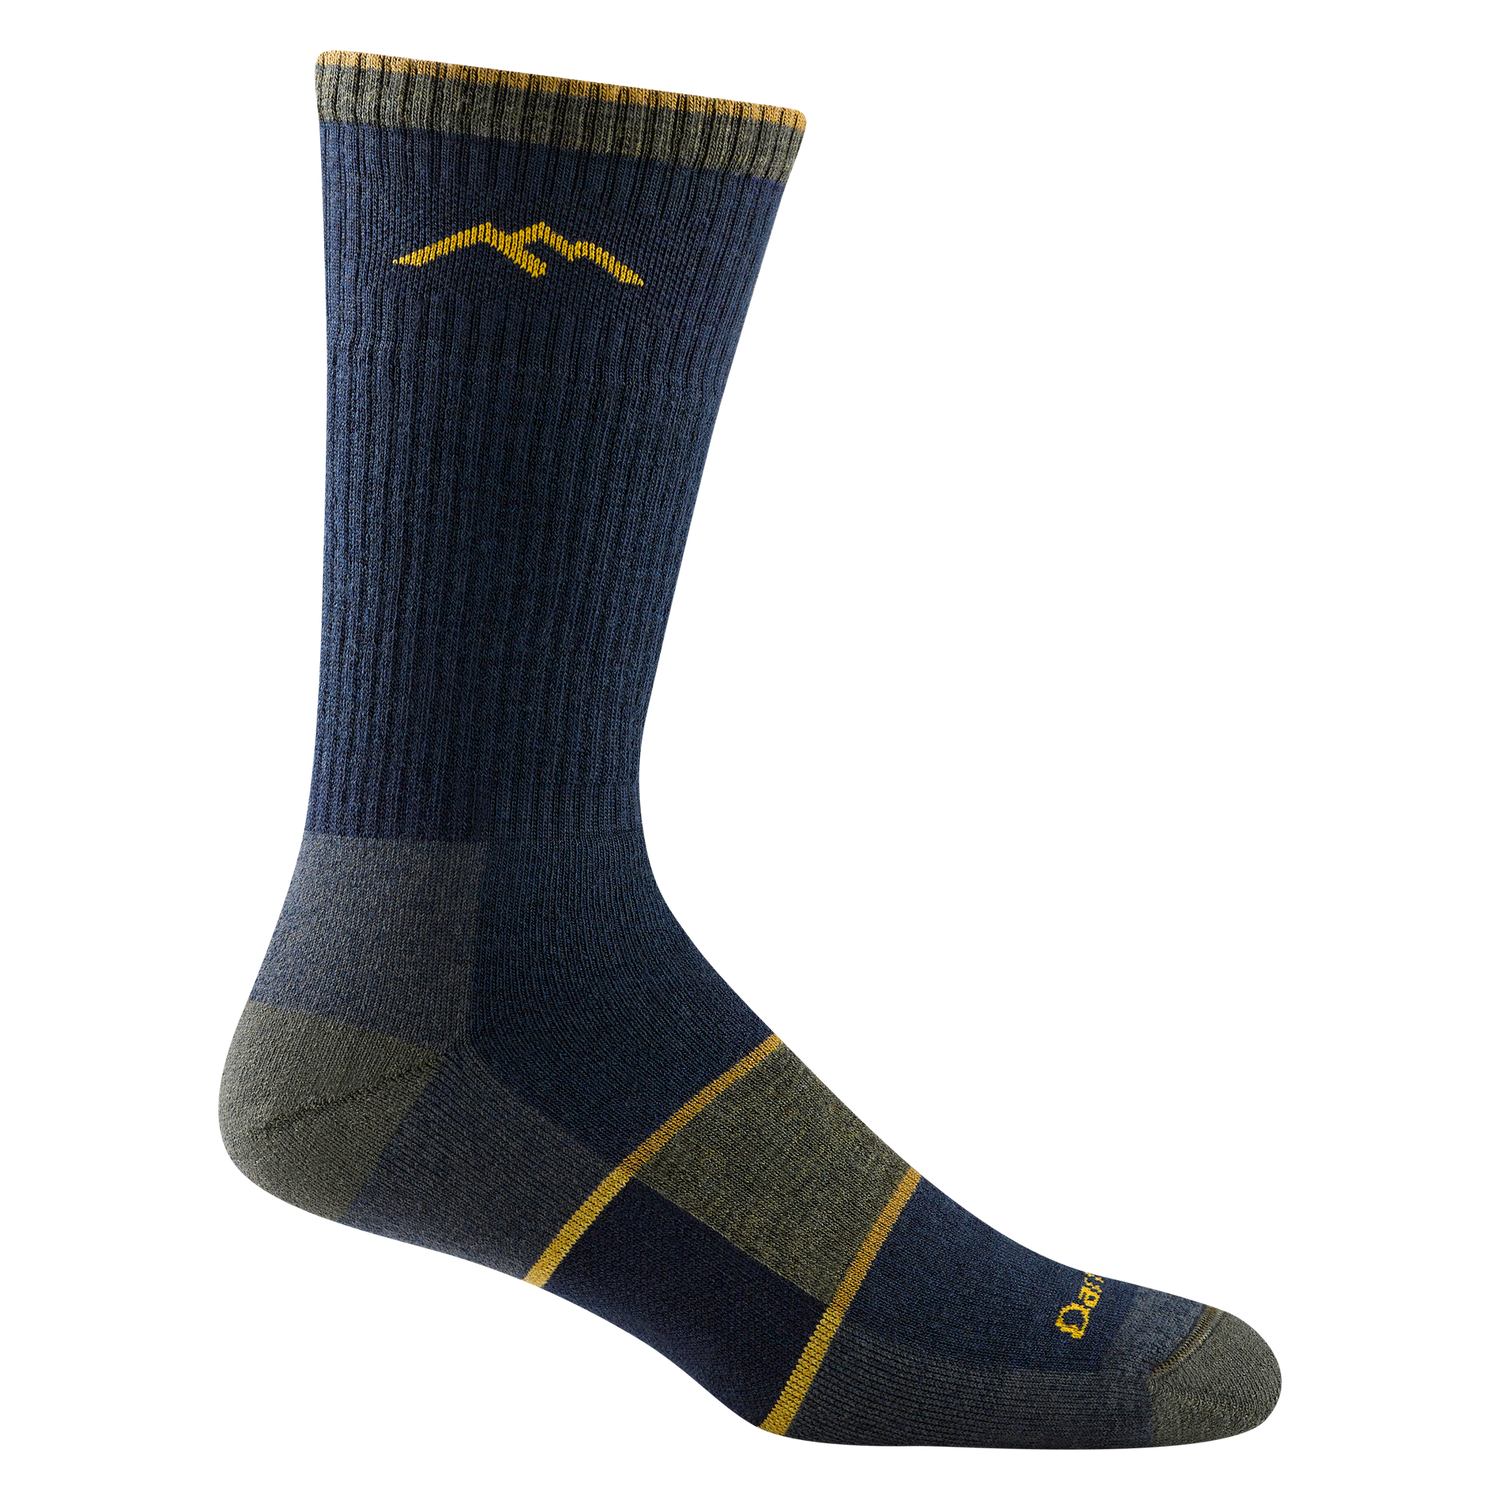 Darn Tough Socks - 1403 - Men’s Hiker Boot Midweight Hiking Sock